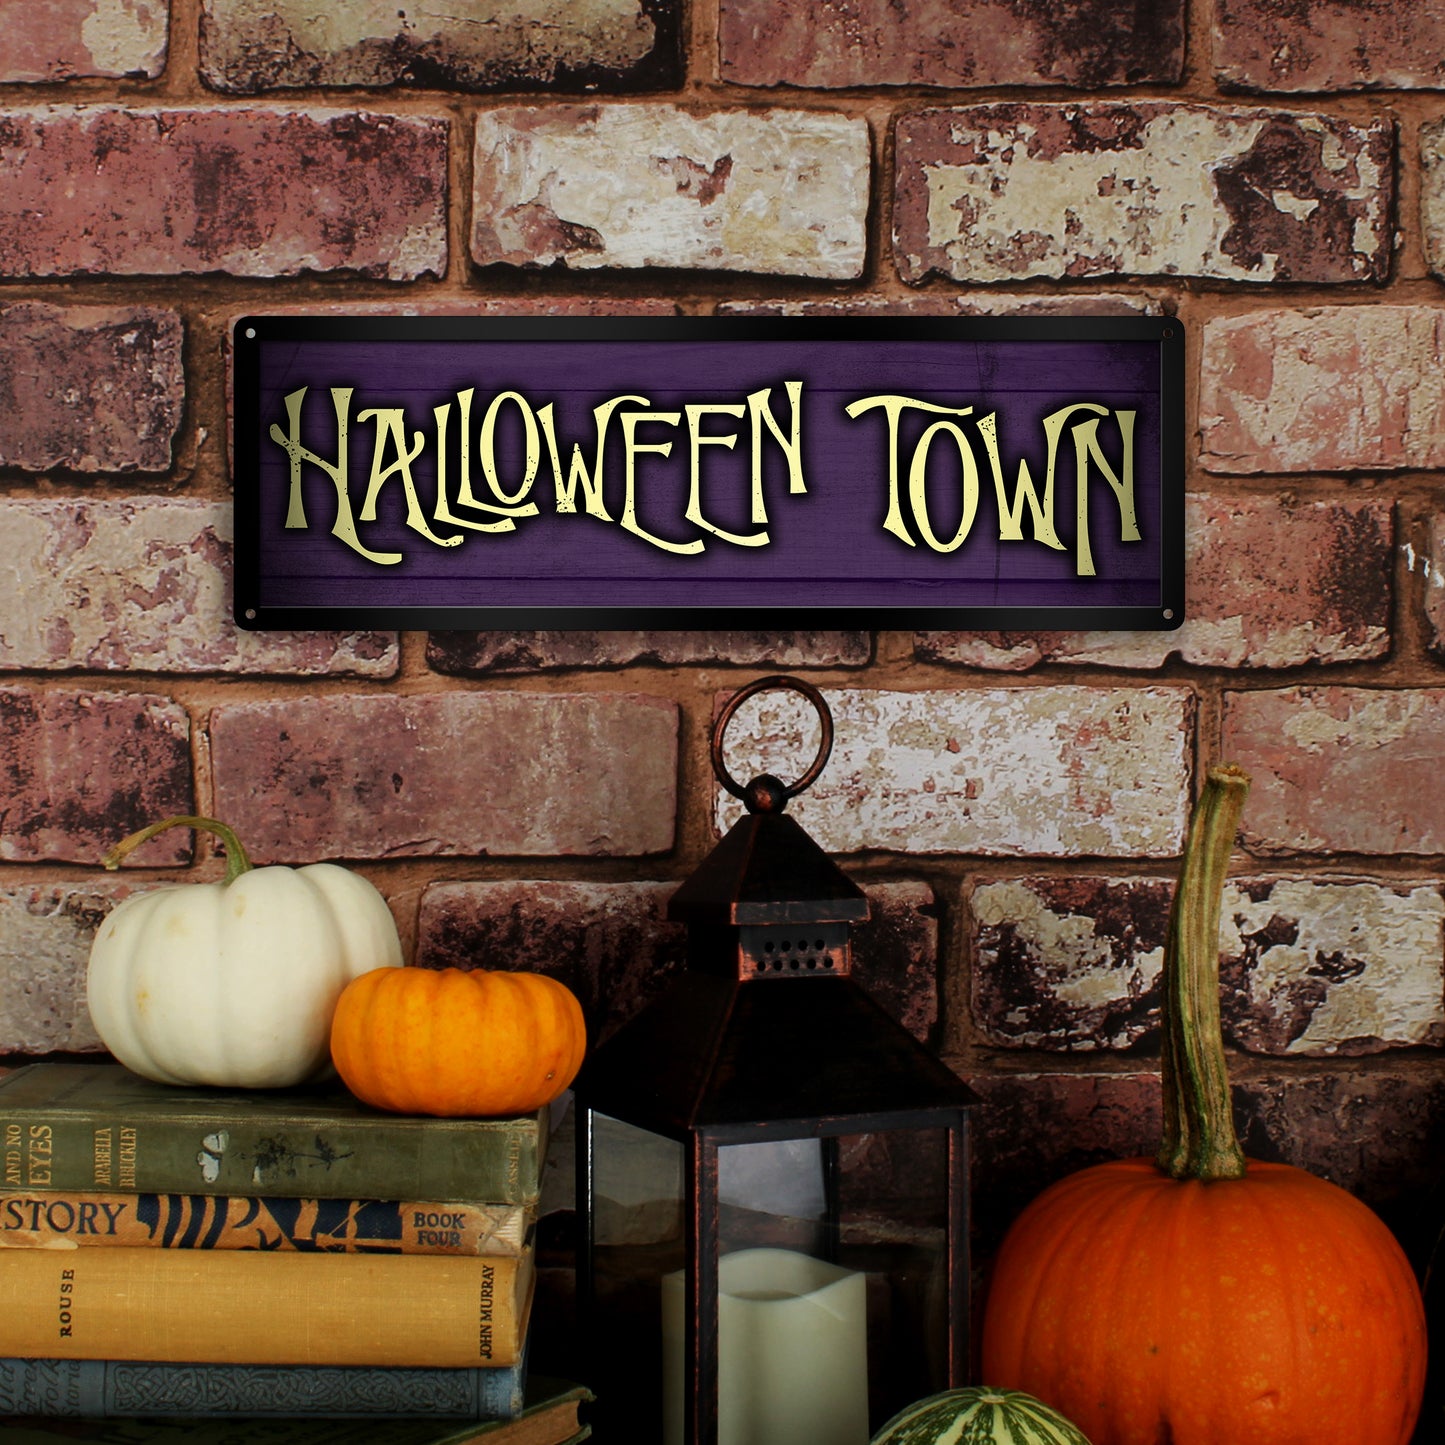 Halloween Town Slim Tin Sign